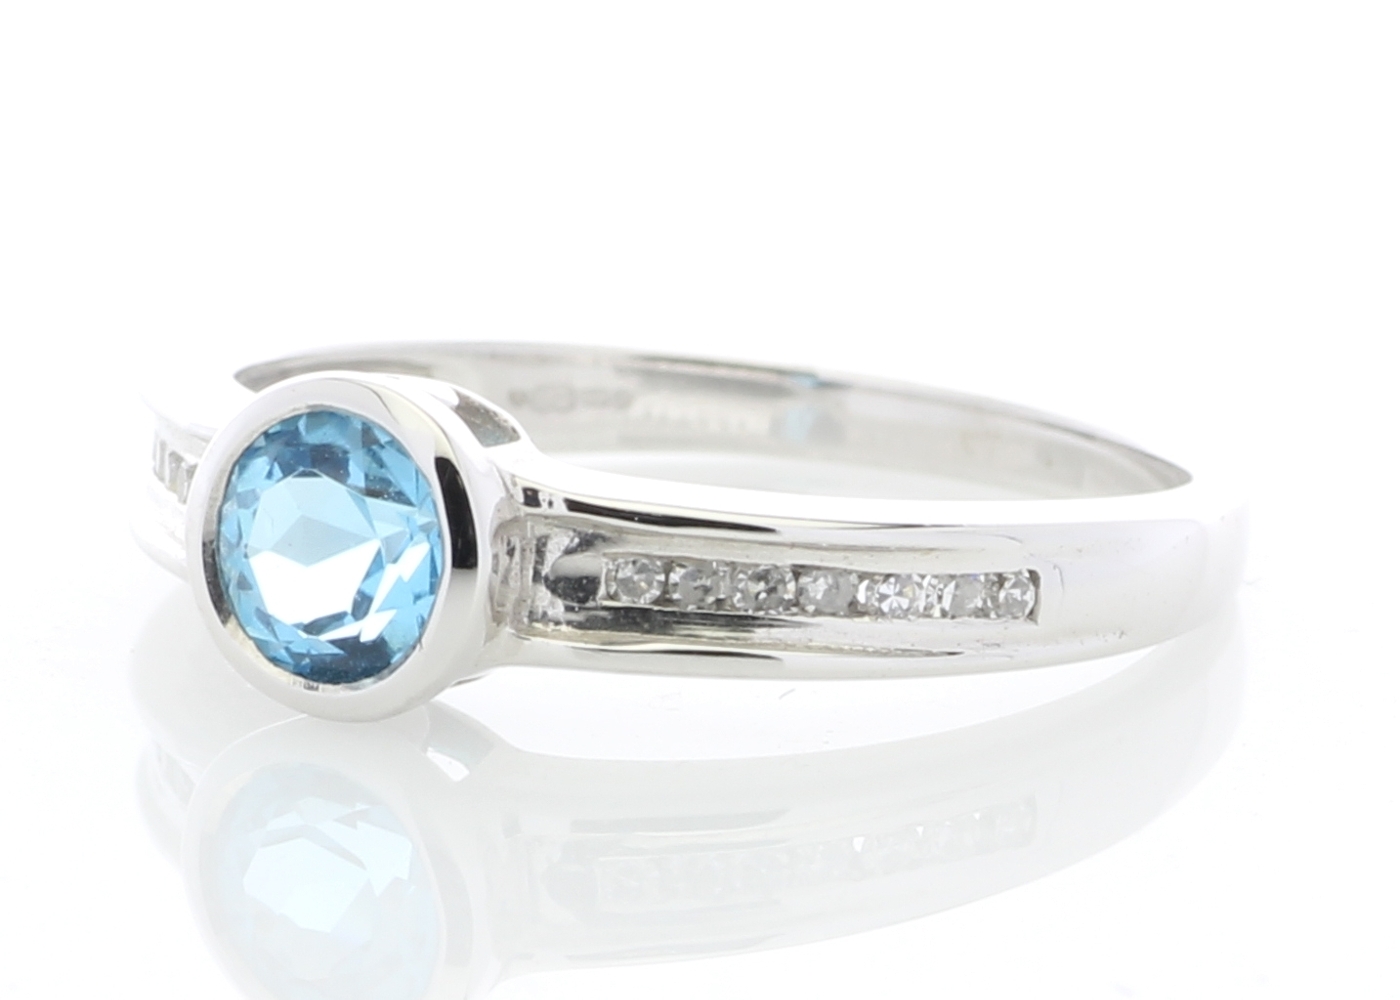 9ct White Gold Diamond & Blue Topaz Ring - Image 2 of 5